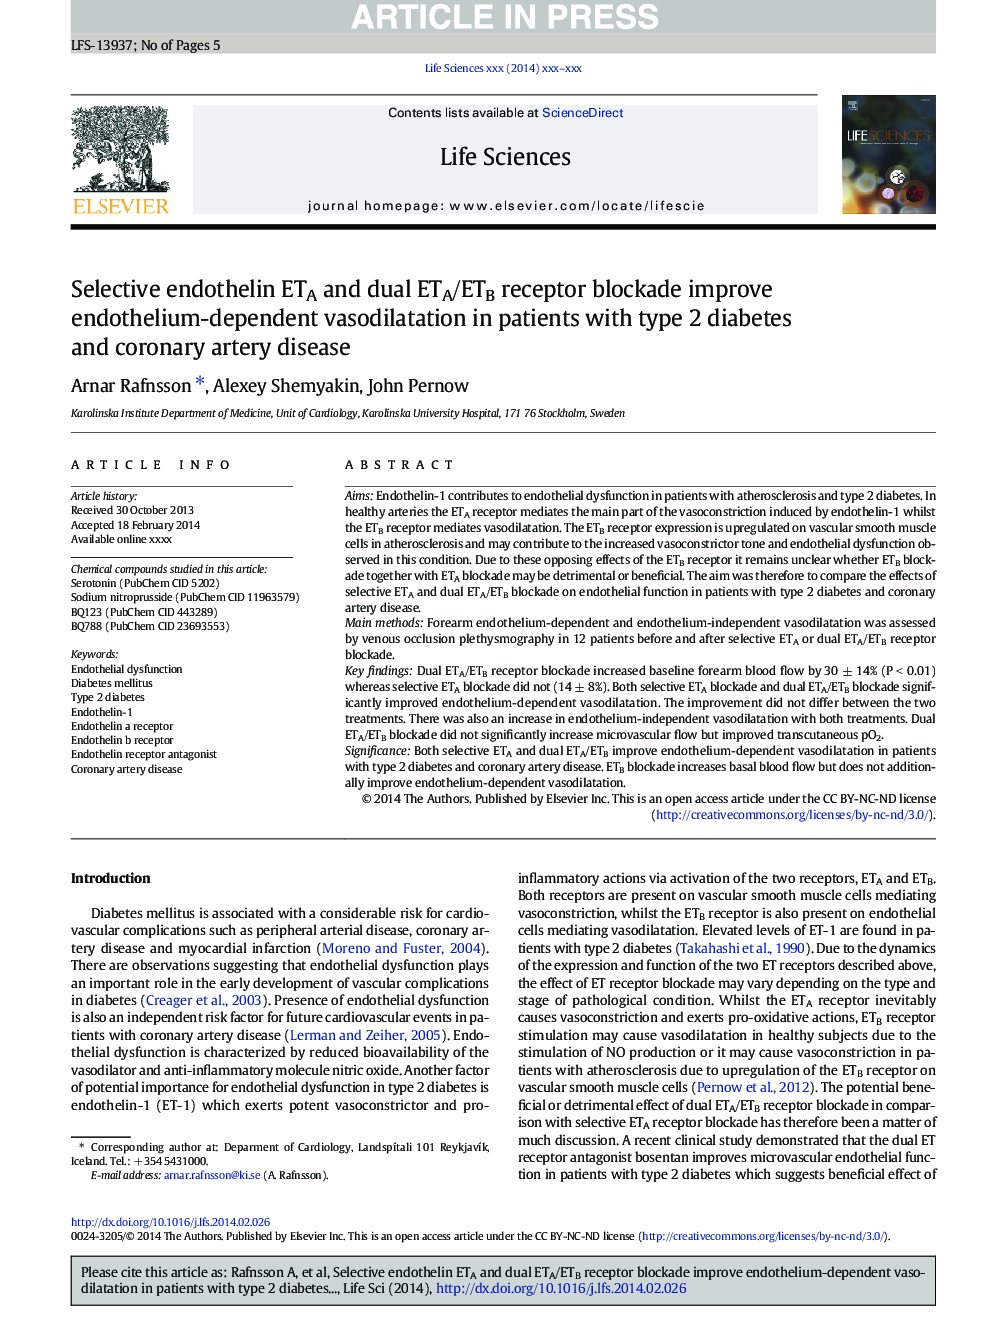 Selective endothelin ETA and dual ETA/ETB receptor blockade improve endothelium-dependent vasodilatation in patients with type 2 diabetes and coronary artery disease